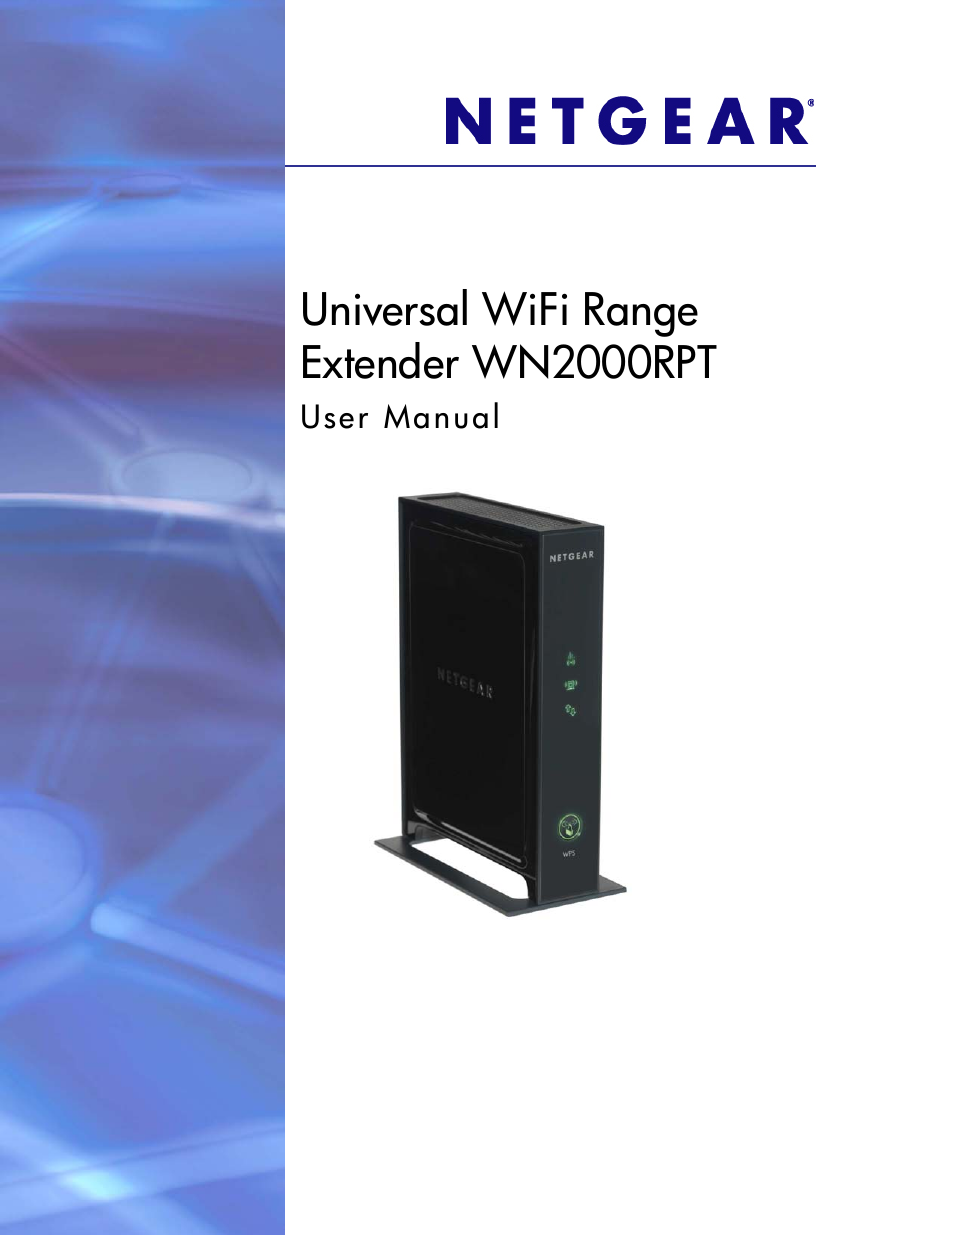 NETGEAR Universal WiFi Range Extender WN2000RPT User Manual | 31 pages